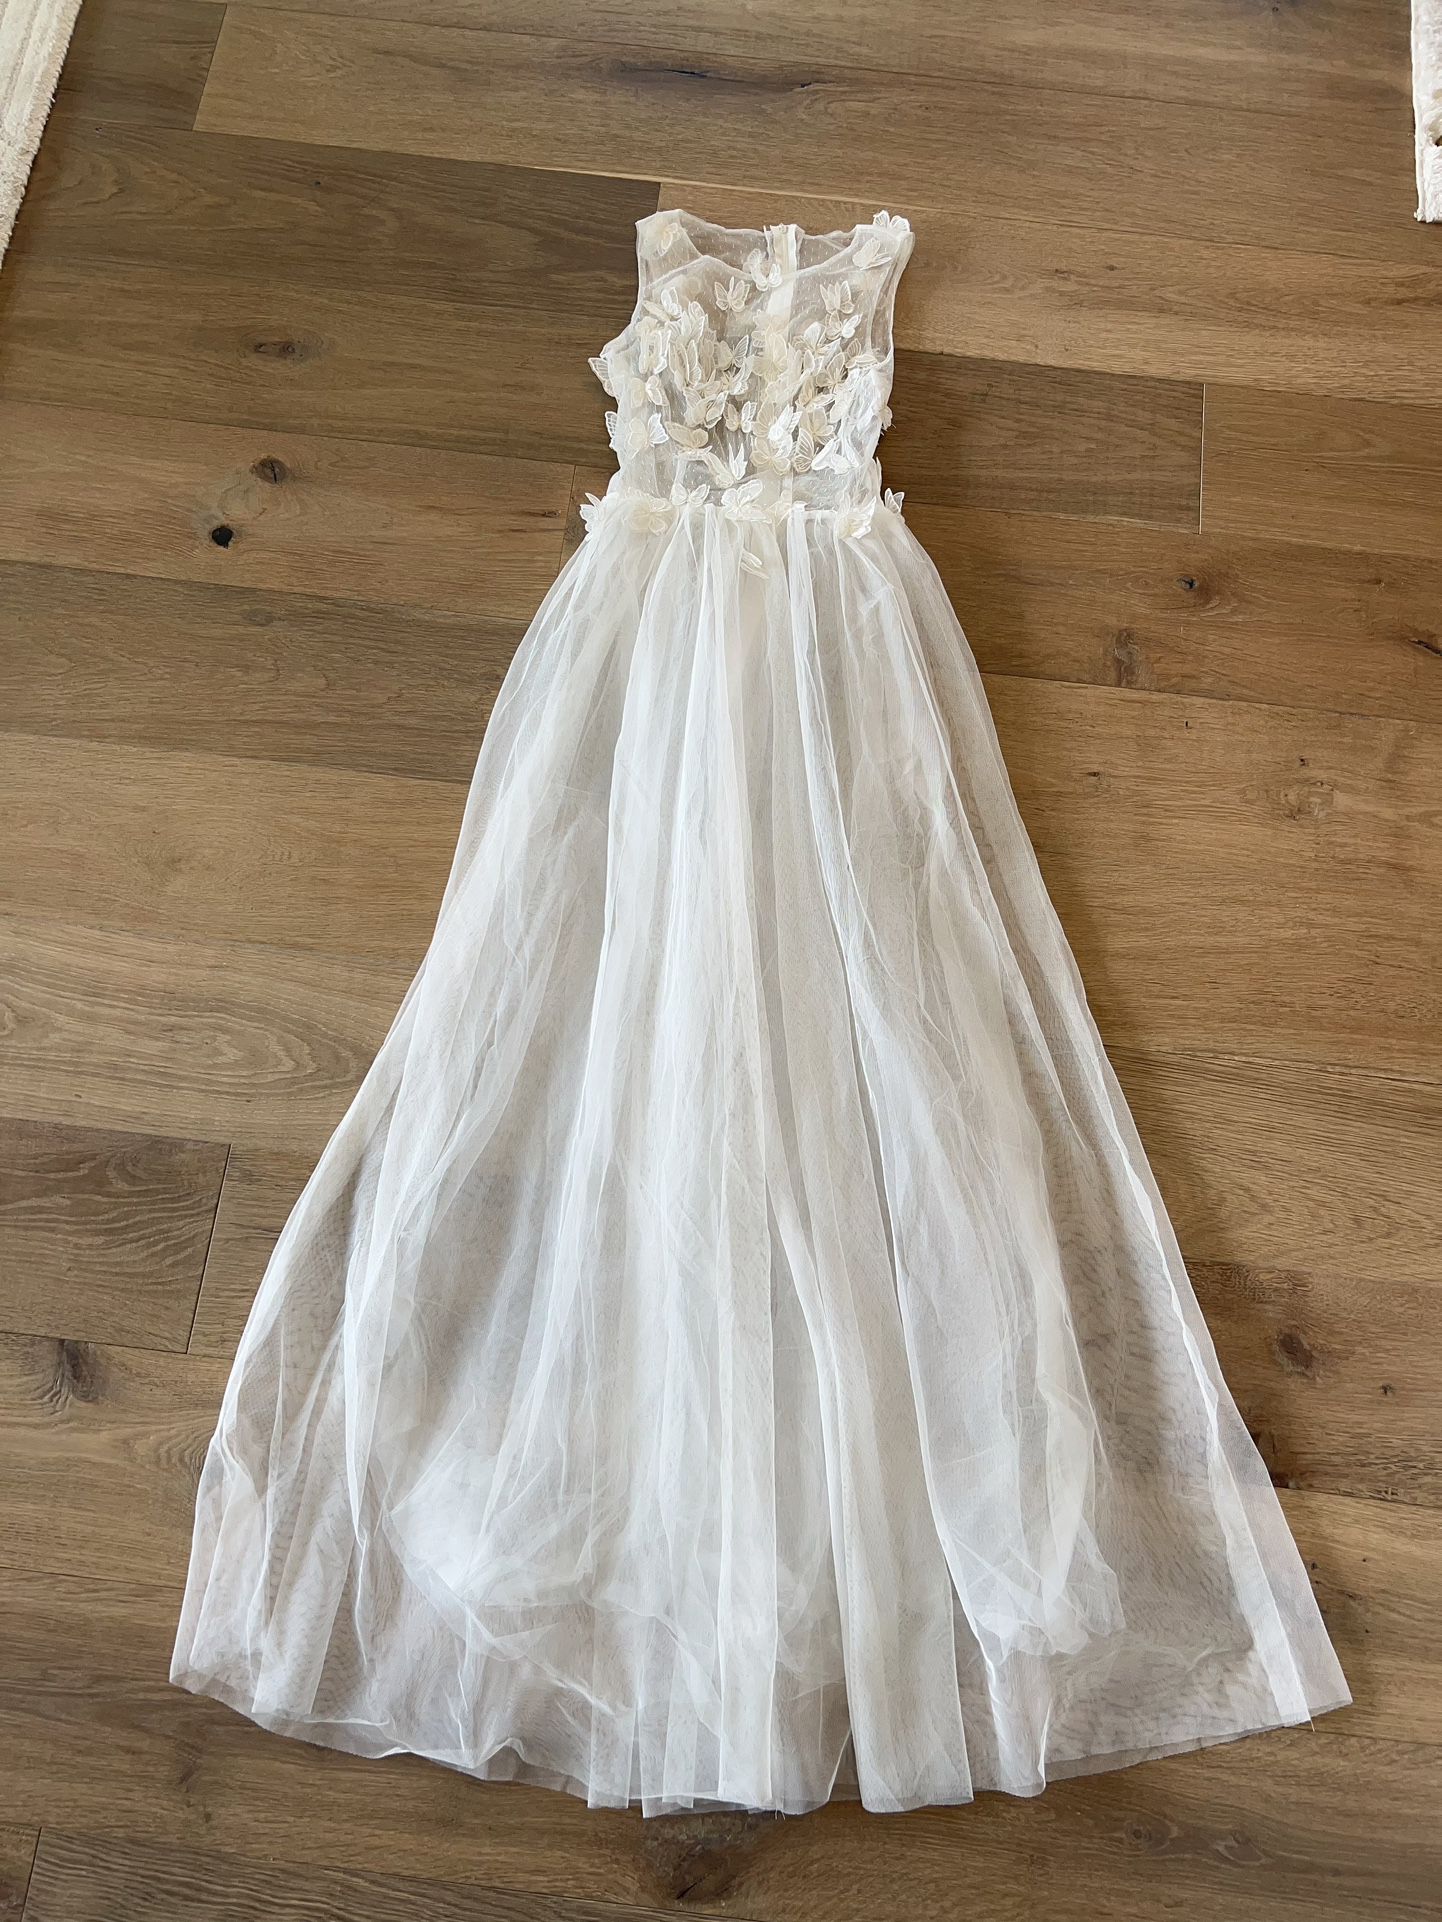 Wedding Dress In White